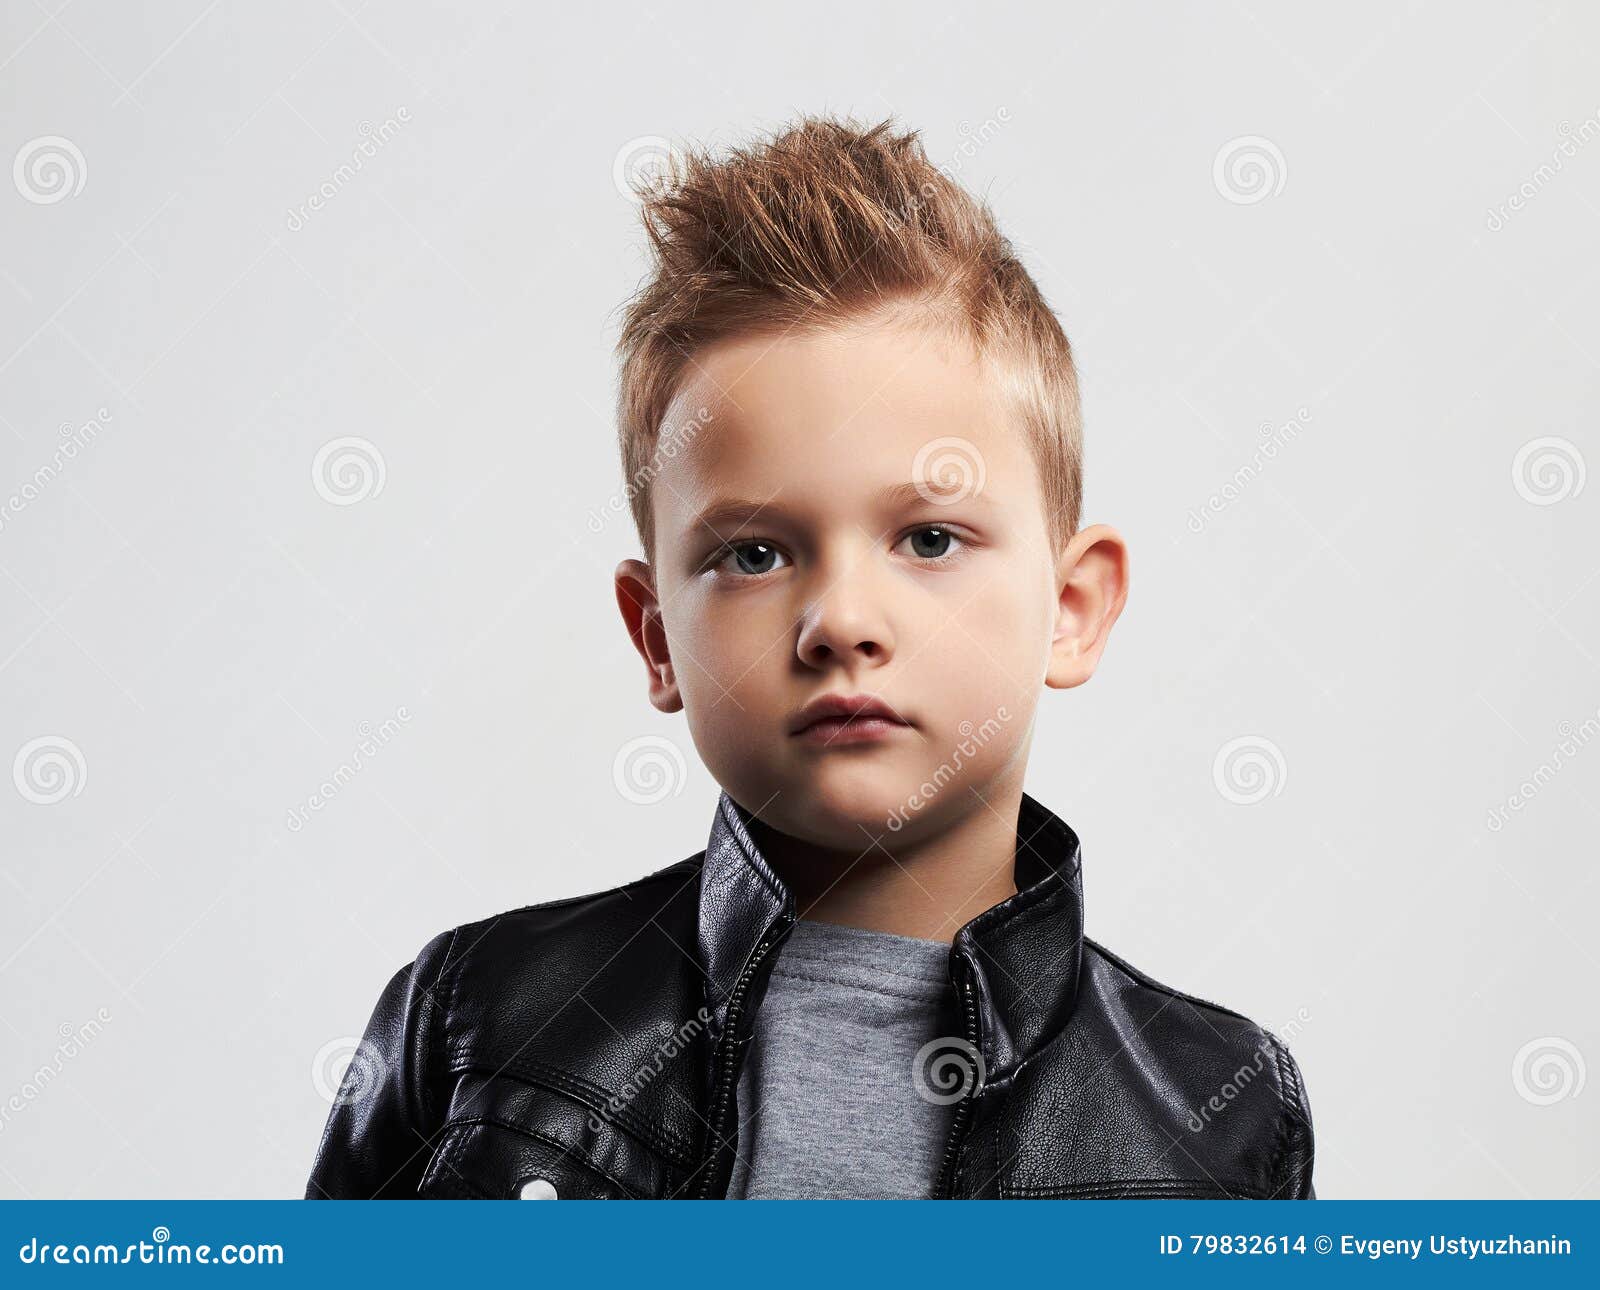 fashionable child leather coat stylish child trendy haircut little boy kids 79832614